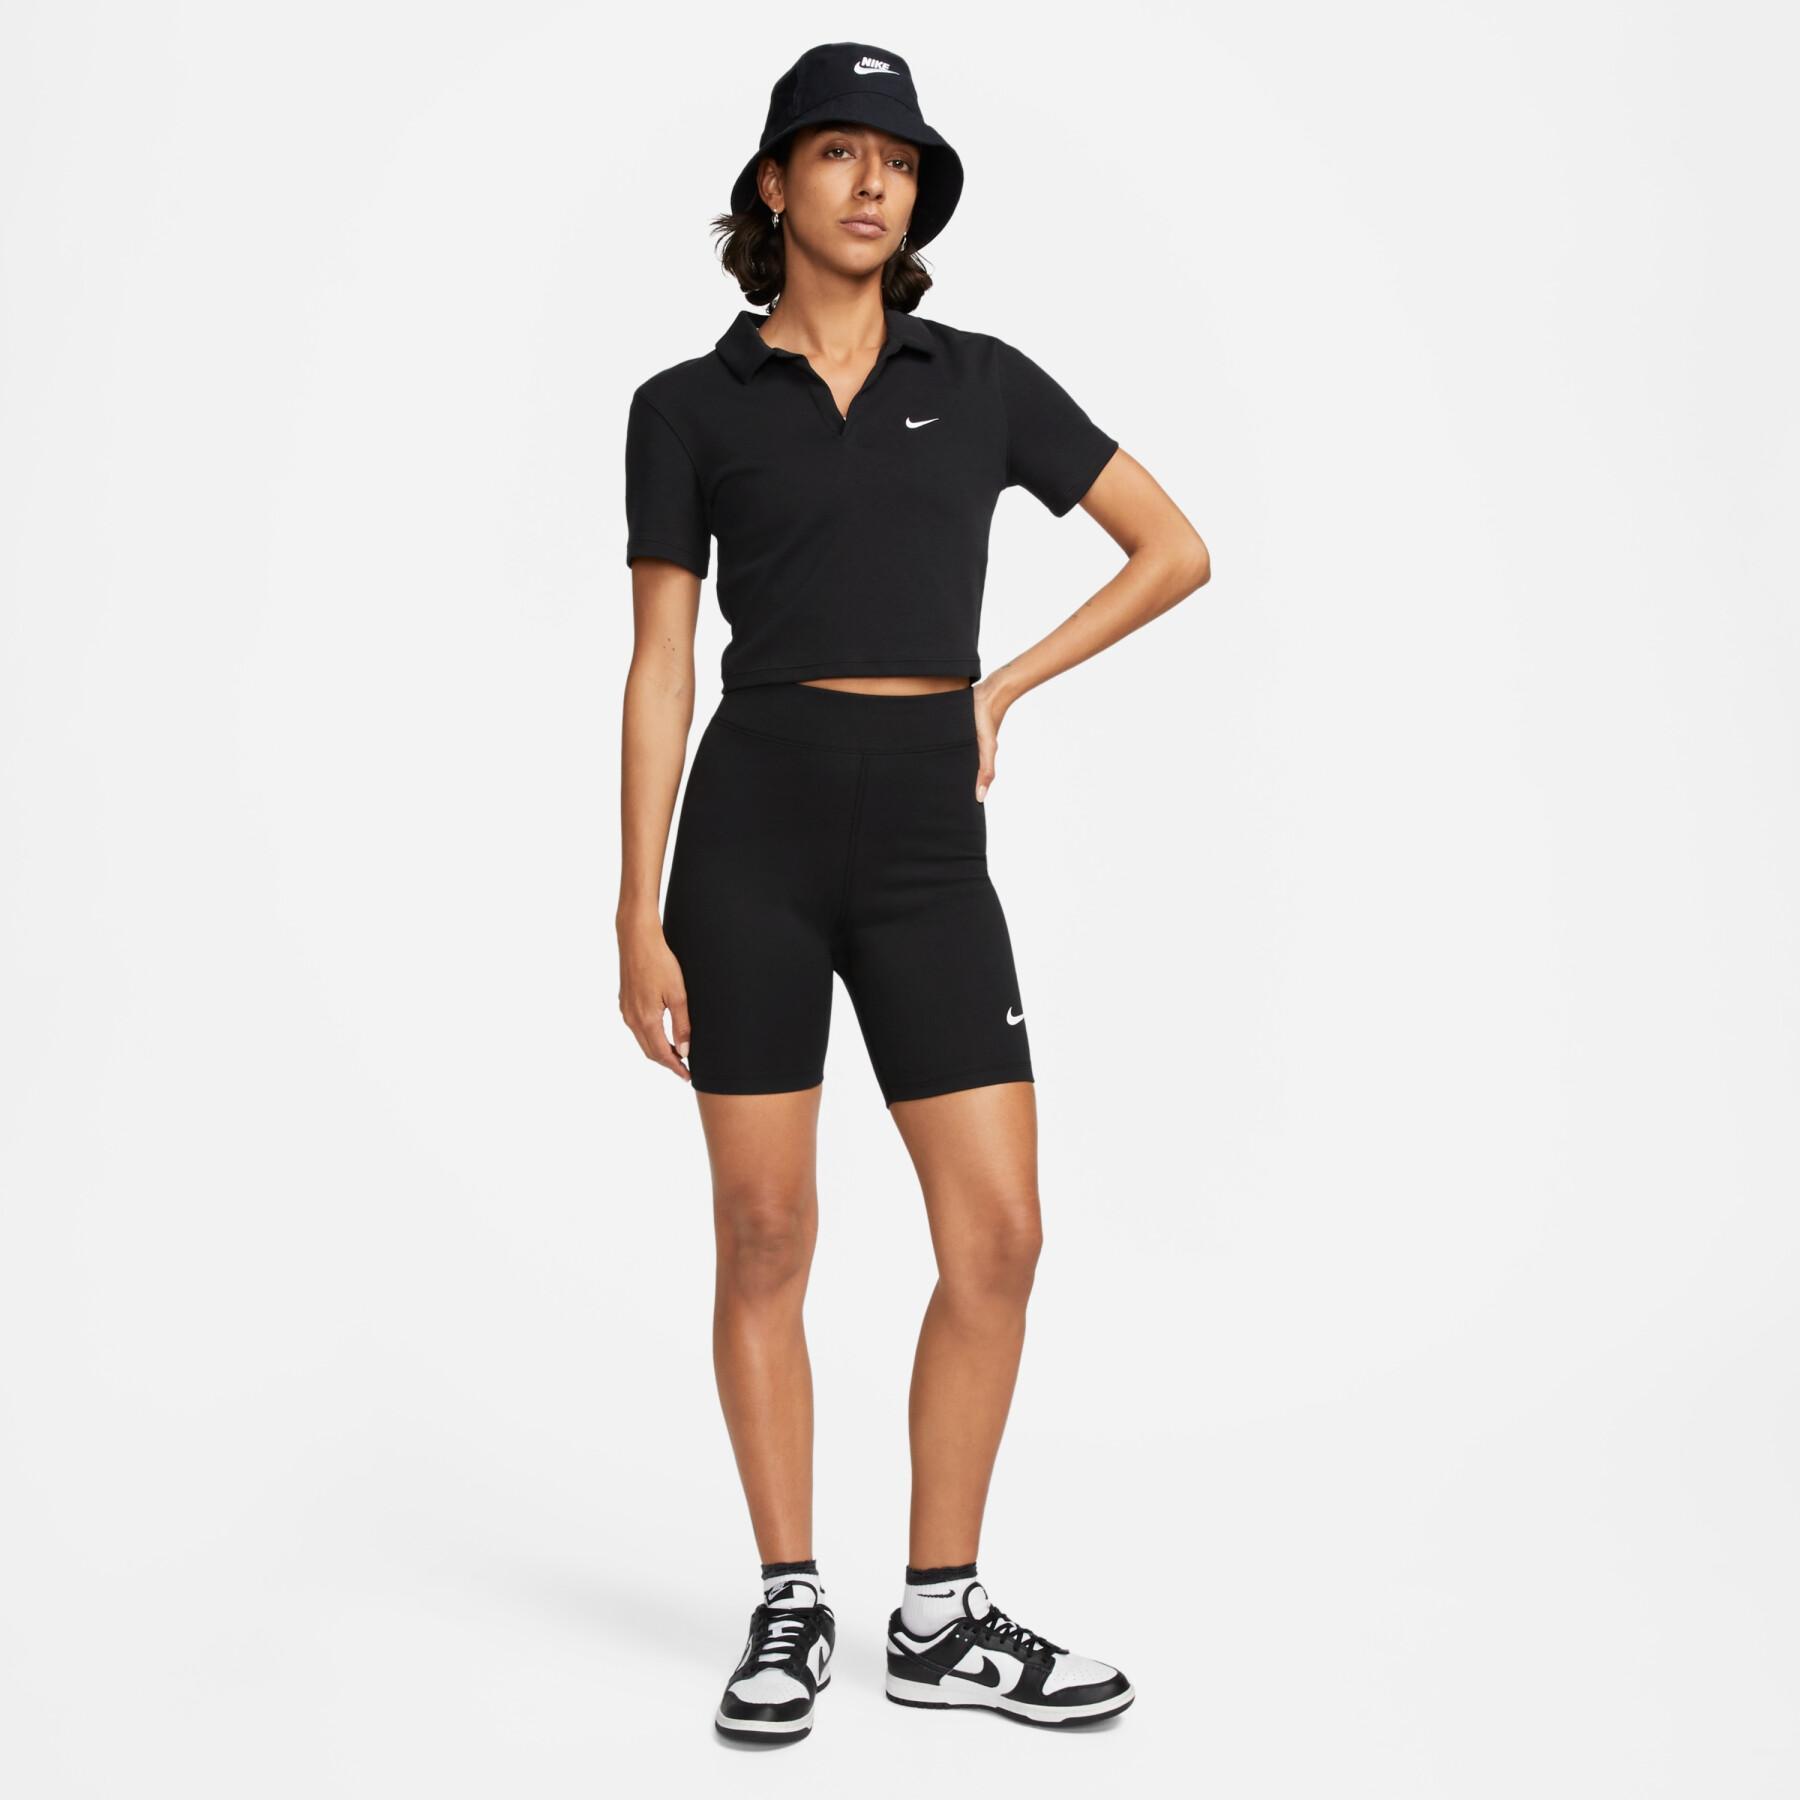 Women's high waist shorts Nike Classics 8In